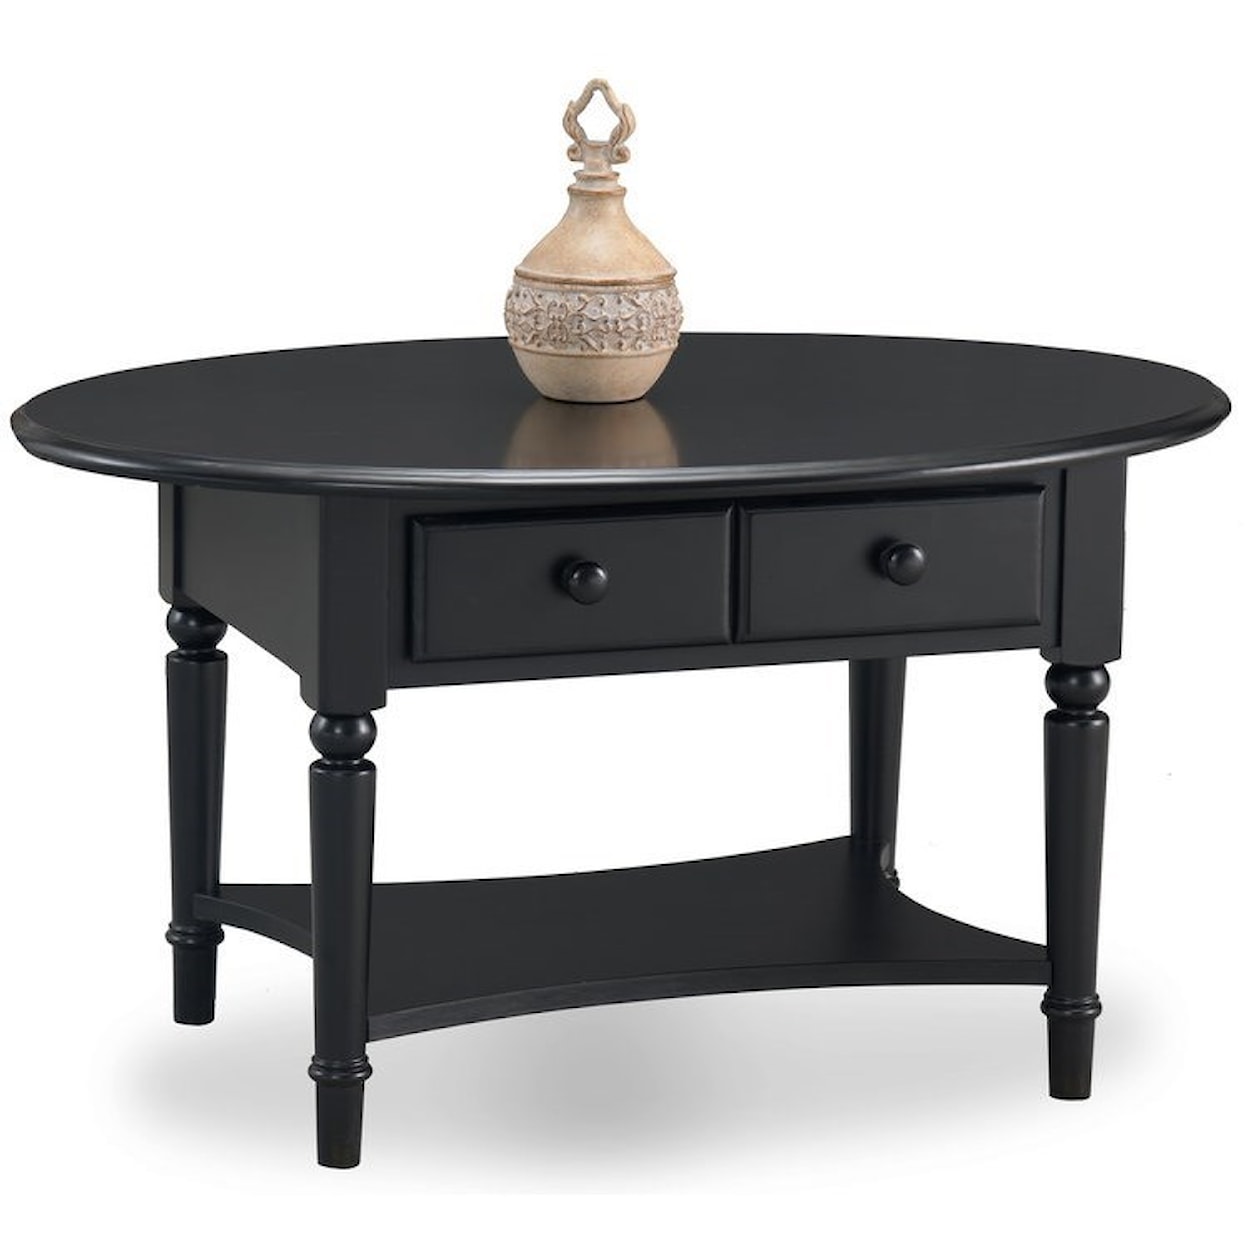 Leick Furniture Coastal Oval Coffee Table